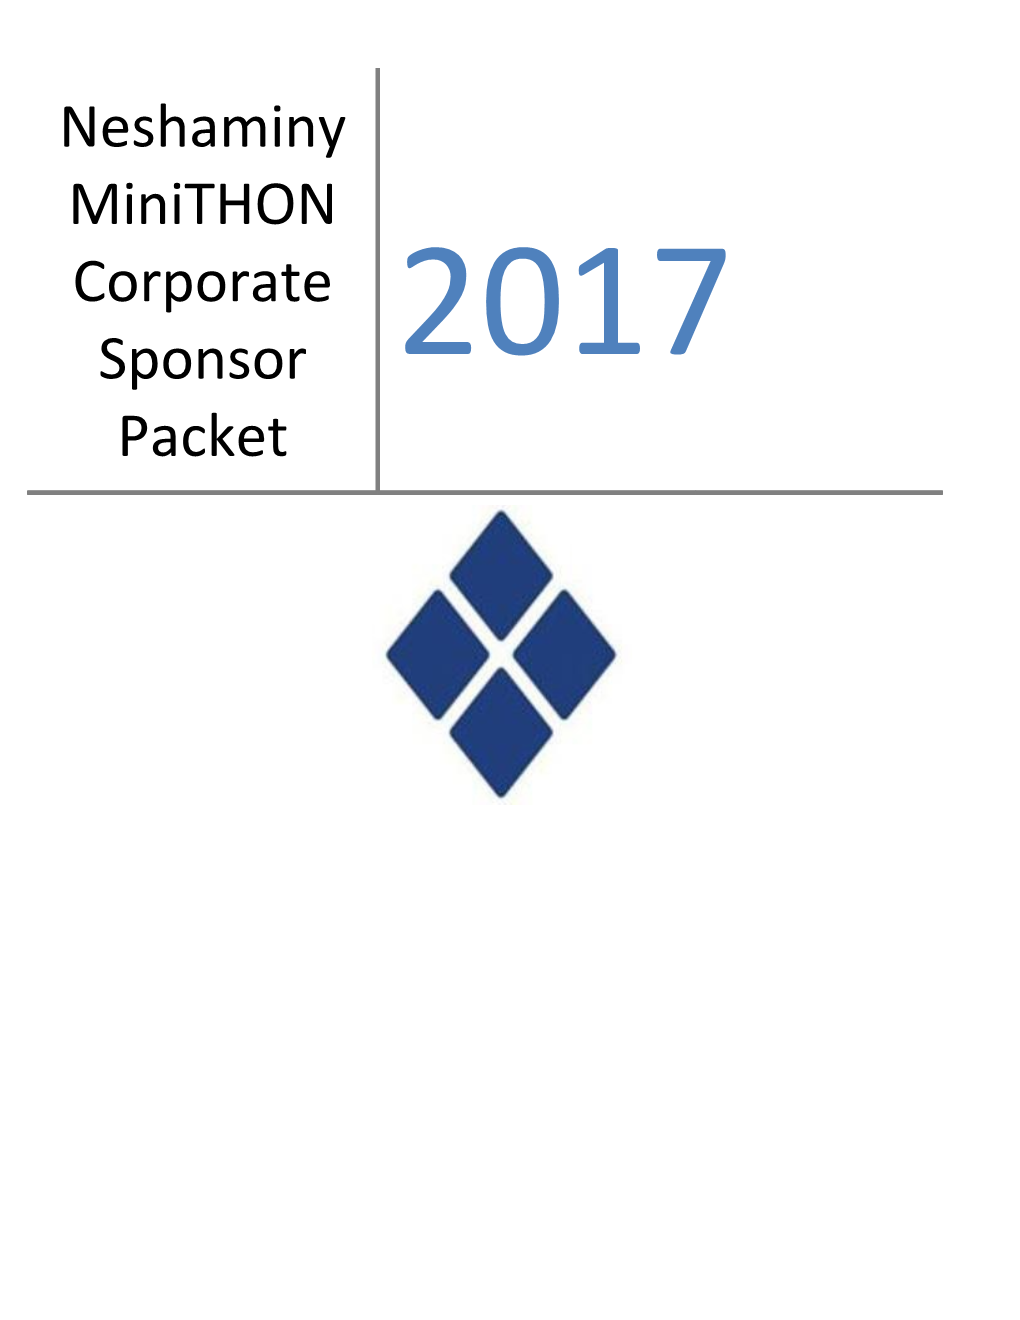 Neshaminy Minithon Corporate Sponsor Packet